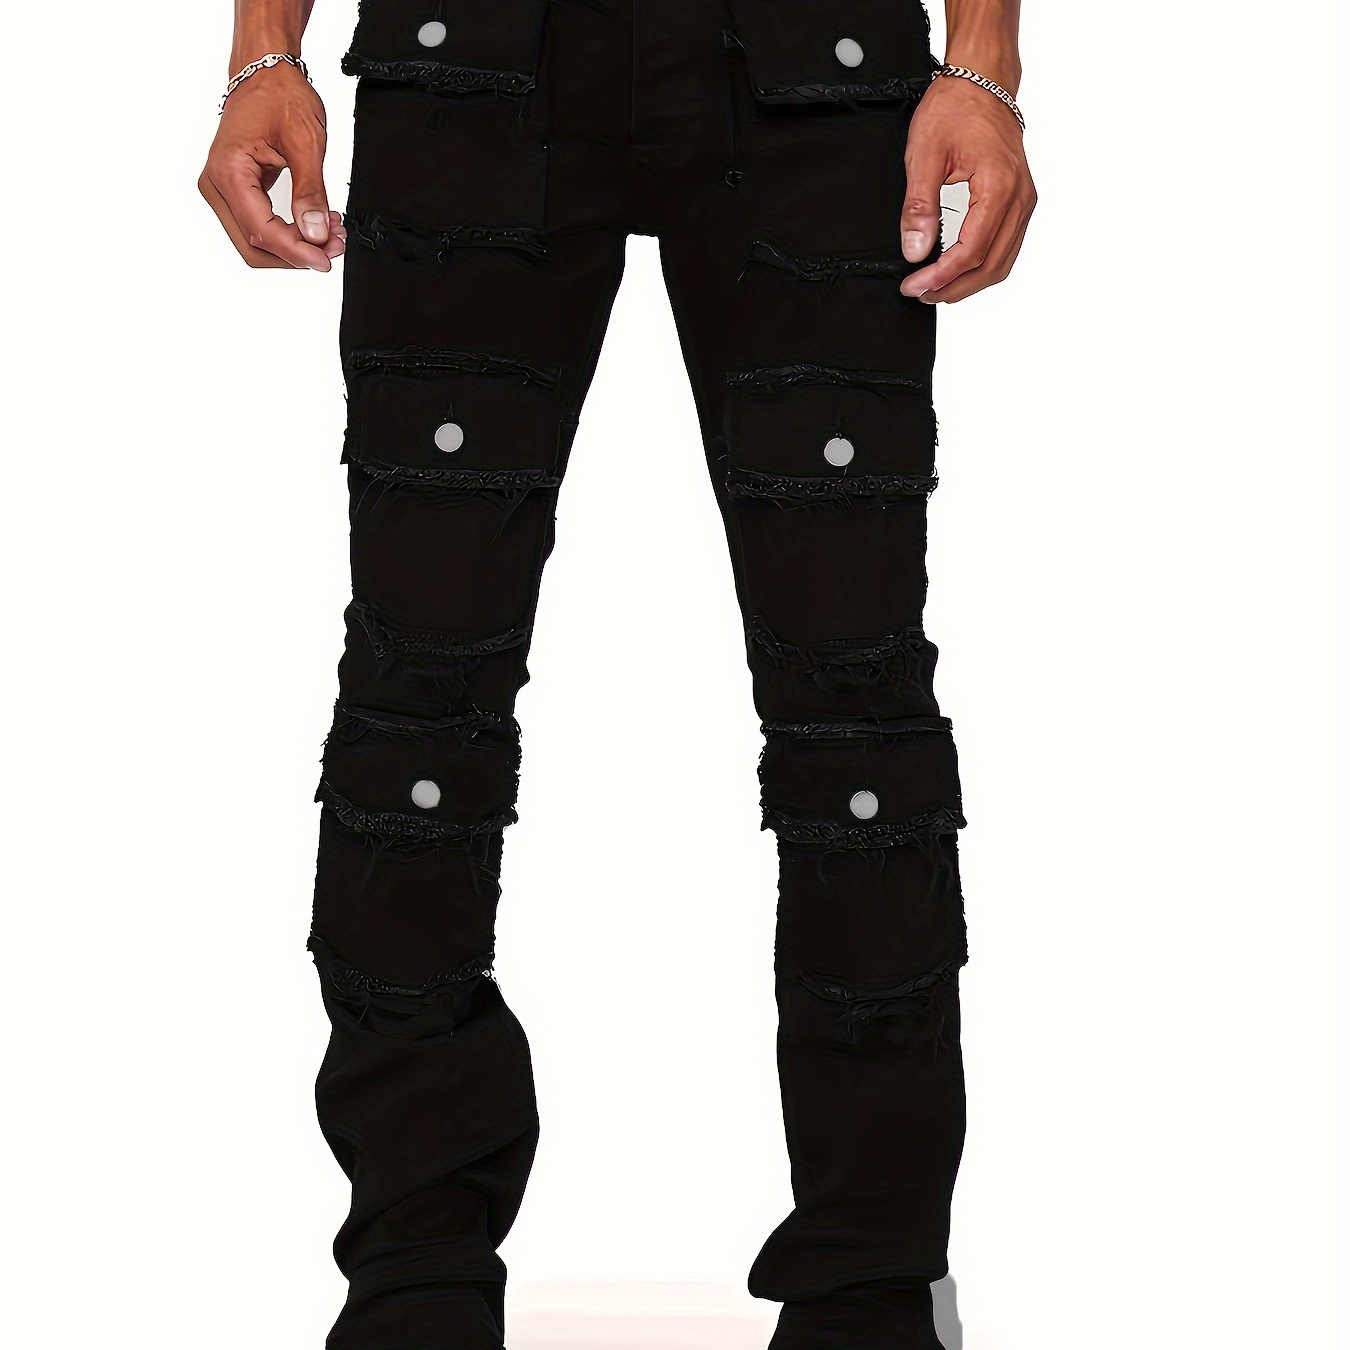 

Men's Plus Size Multi-pocket Stretch Cotton Denim Jeans, Comfort Fit Cargo Style Pants With Distressed Detail